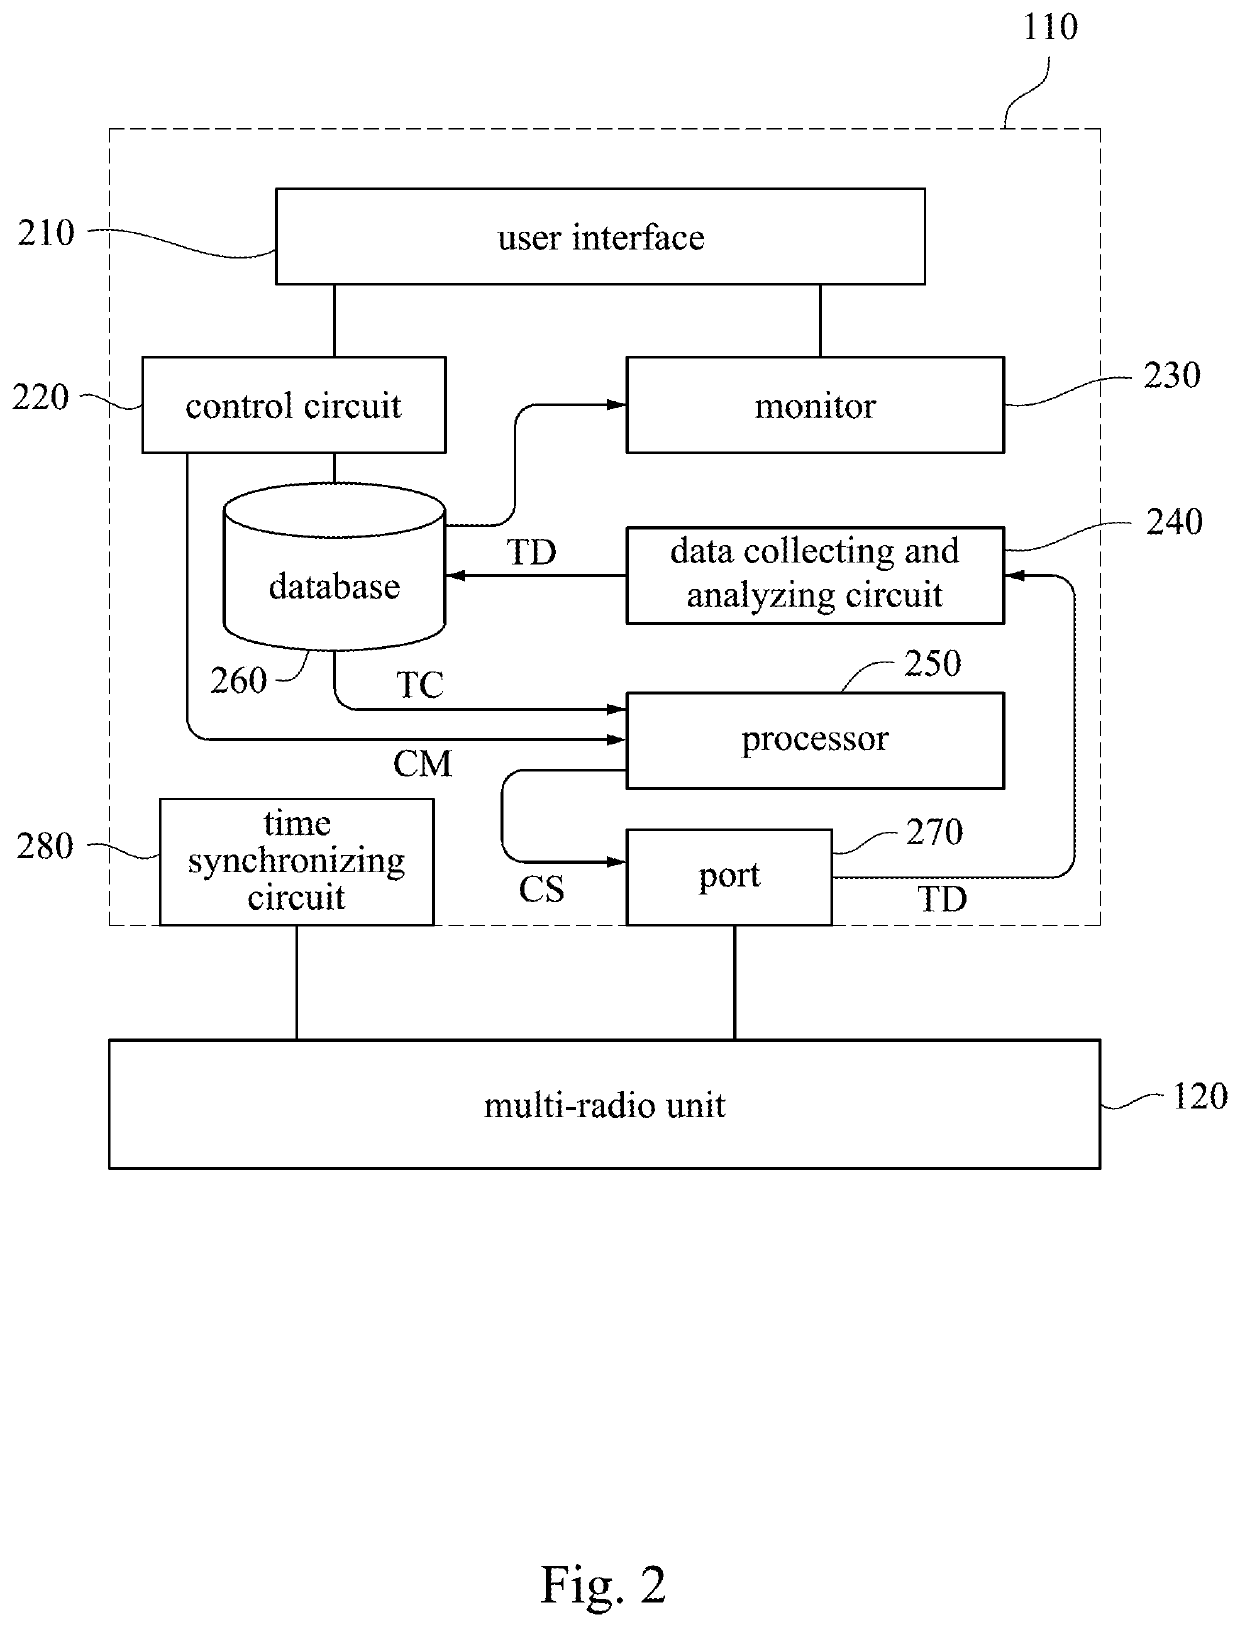 System and method of emulating radio device